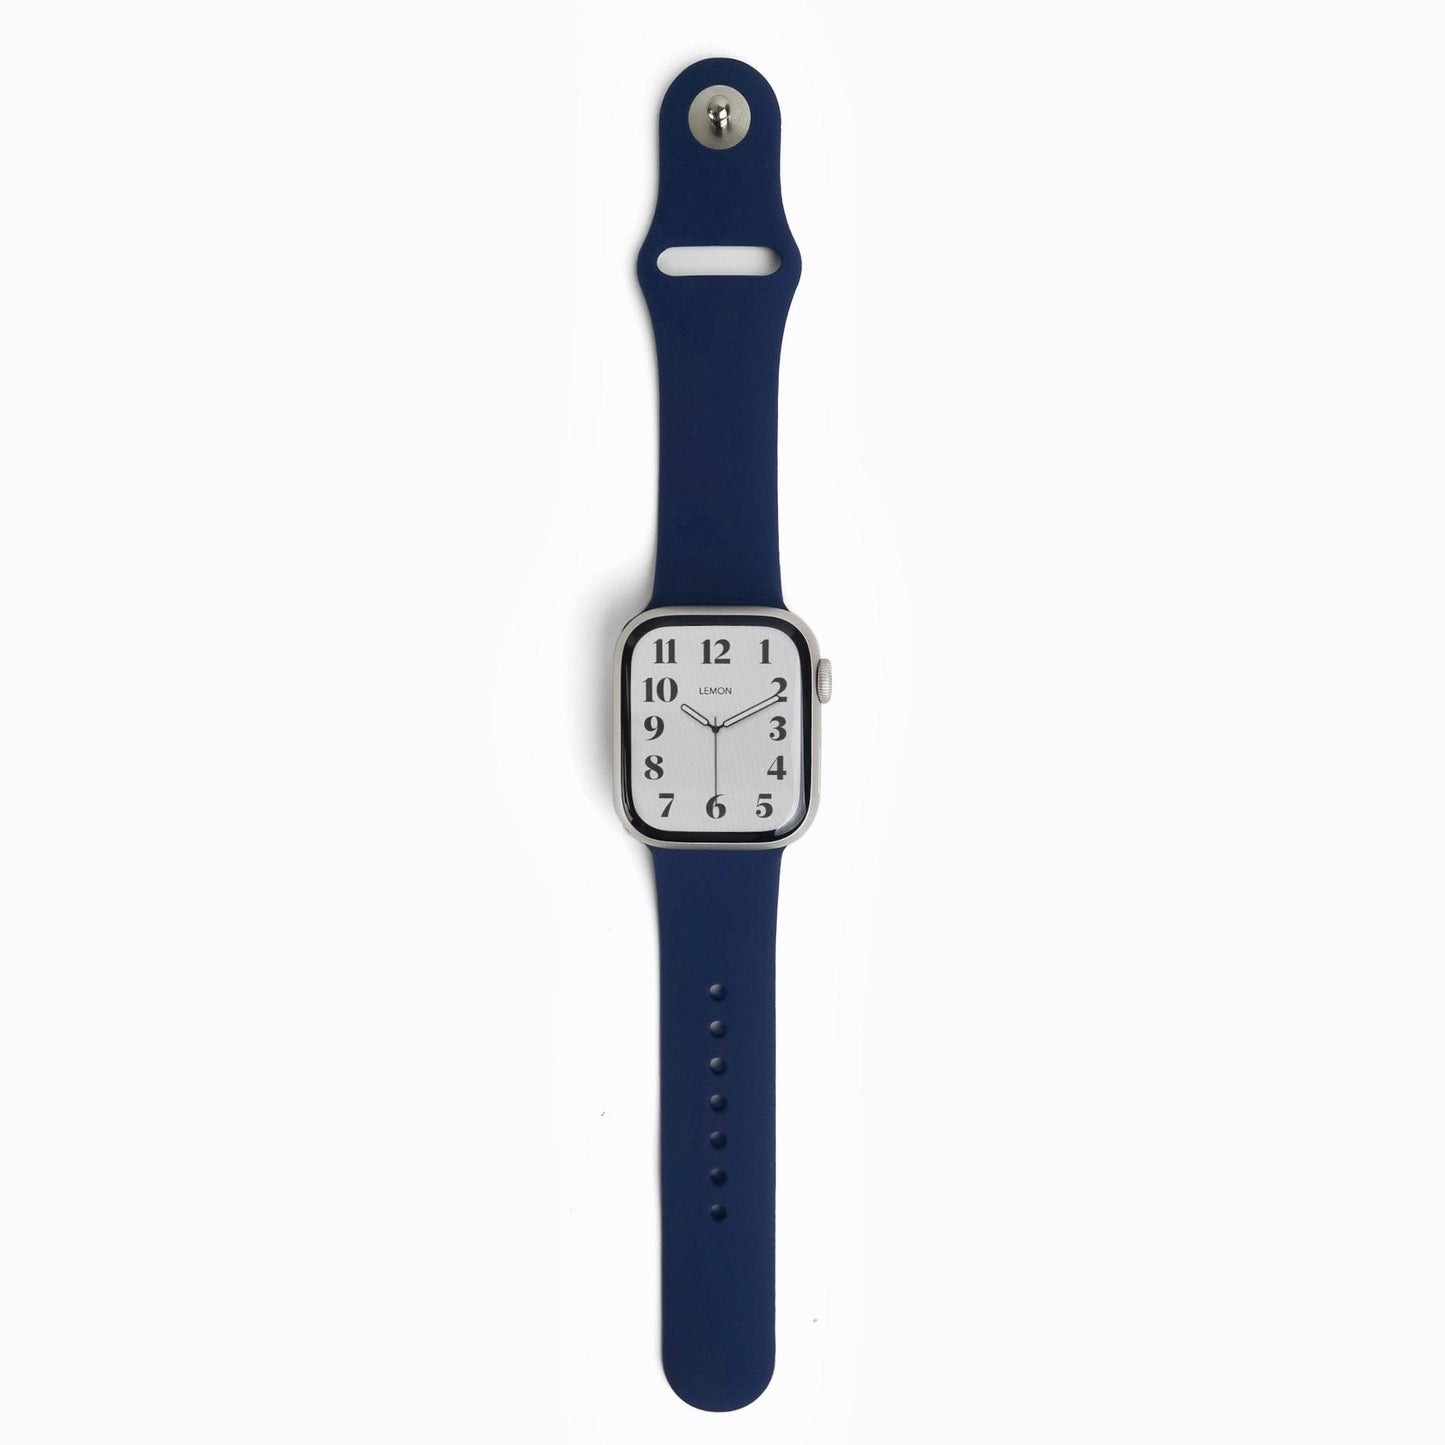 Essential Apple Watch Band - Midnight Blue